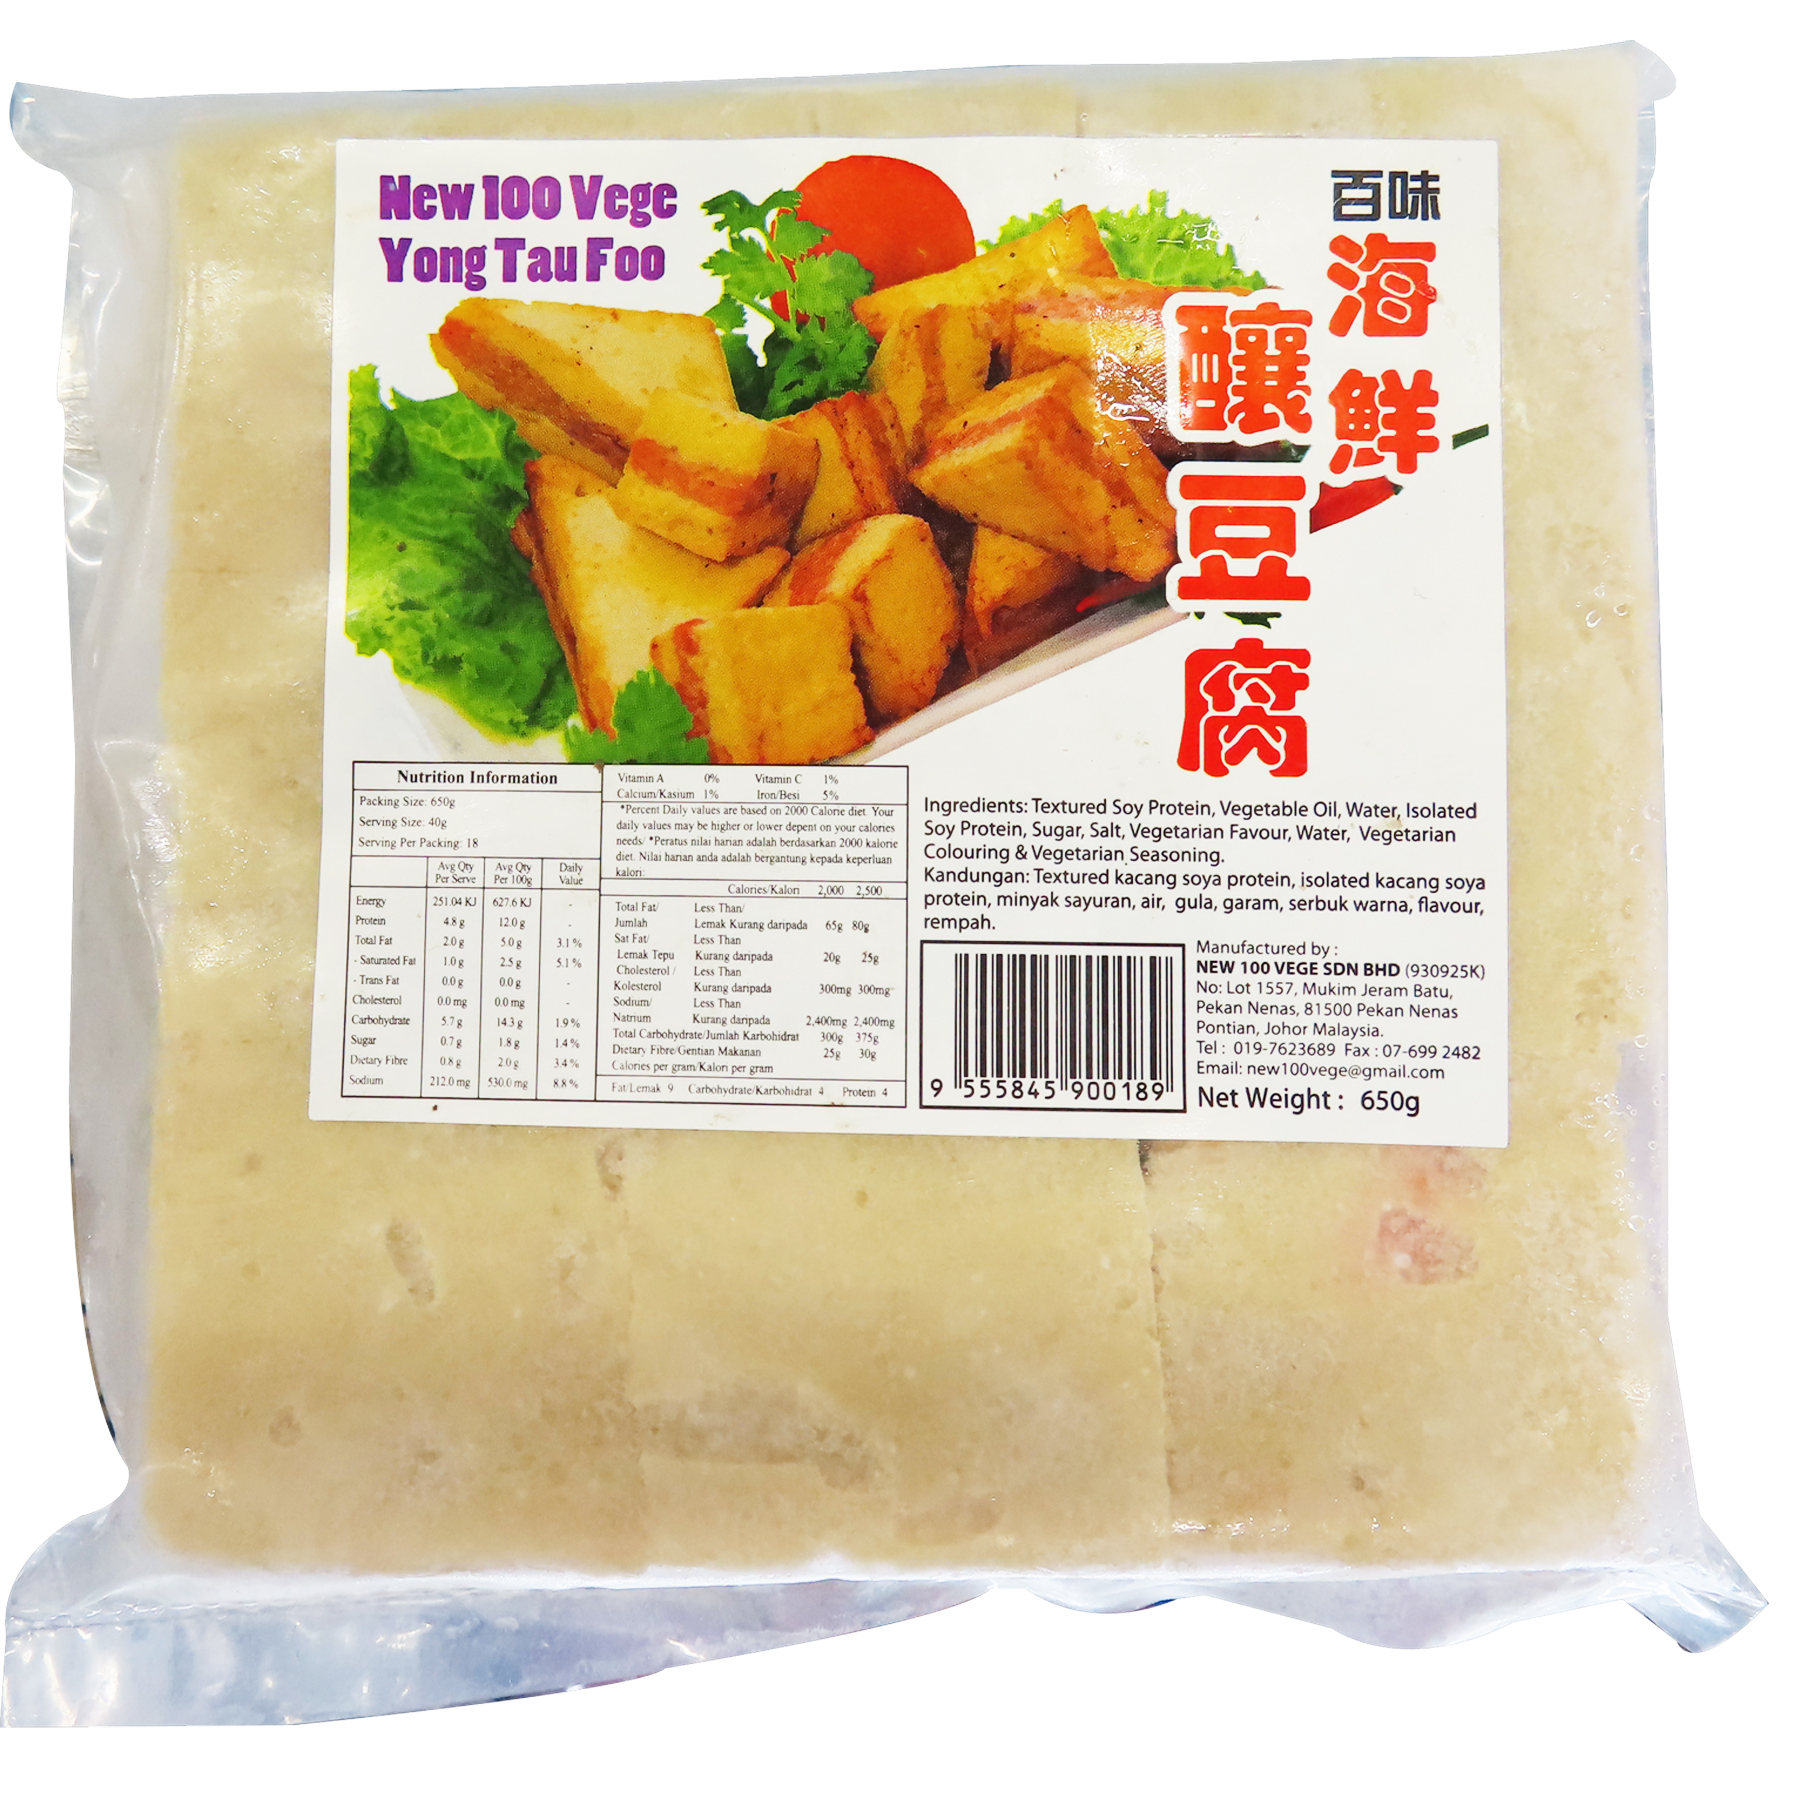 Image 100 veggie Yong Tau Foo 百味 - 海鲜酿豆腐650grams